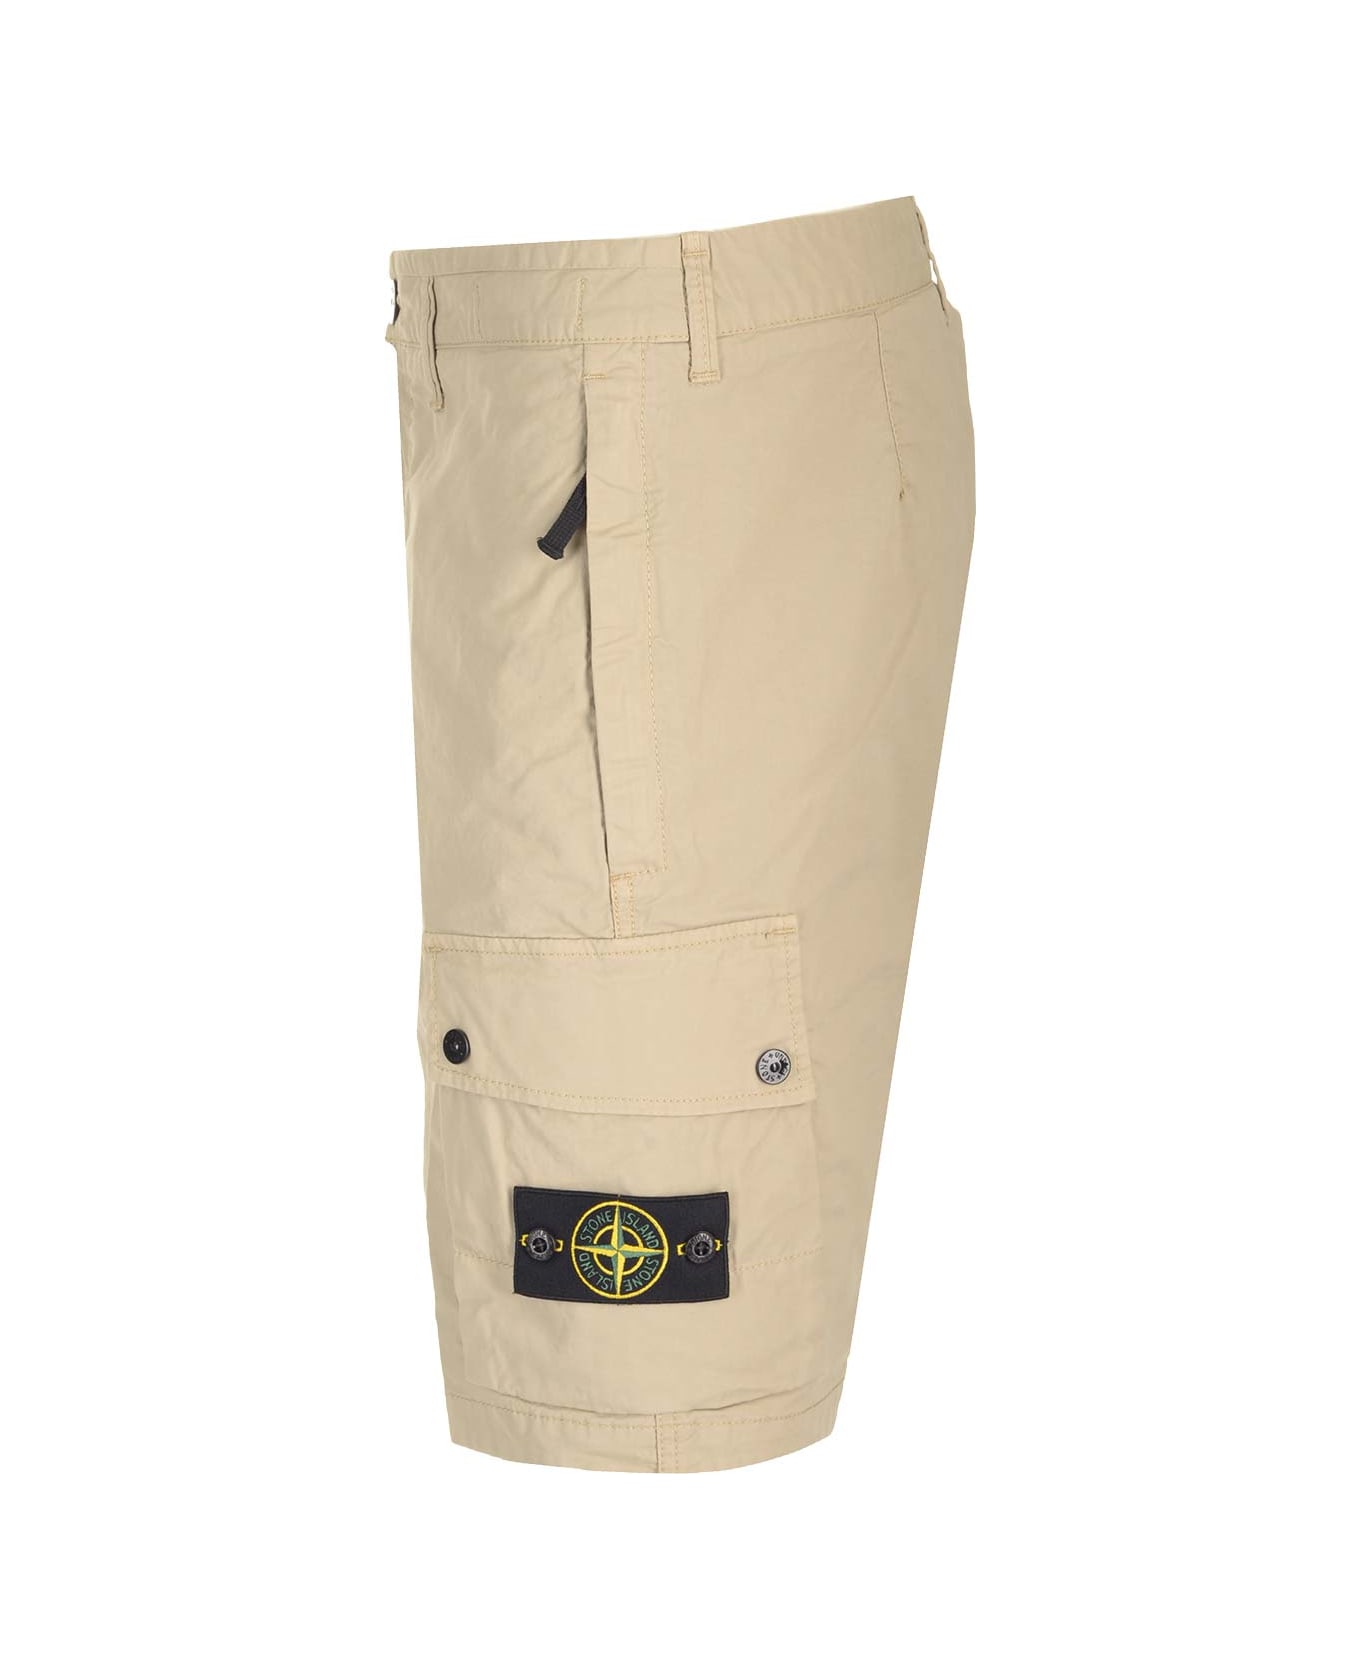 Stone Island Cargo Shorts In Sand-colored Stretch Supima Cotton - Beige ショートパンツ